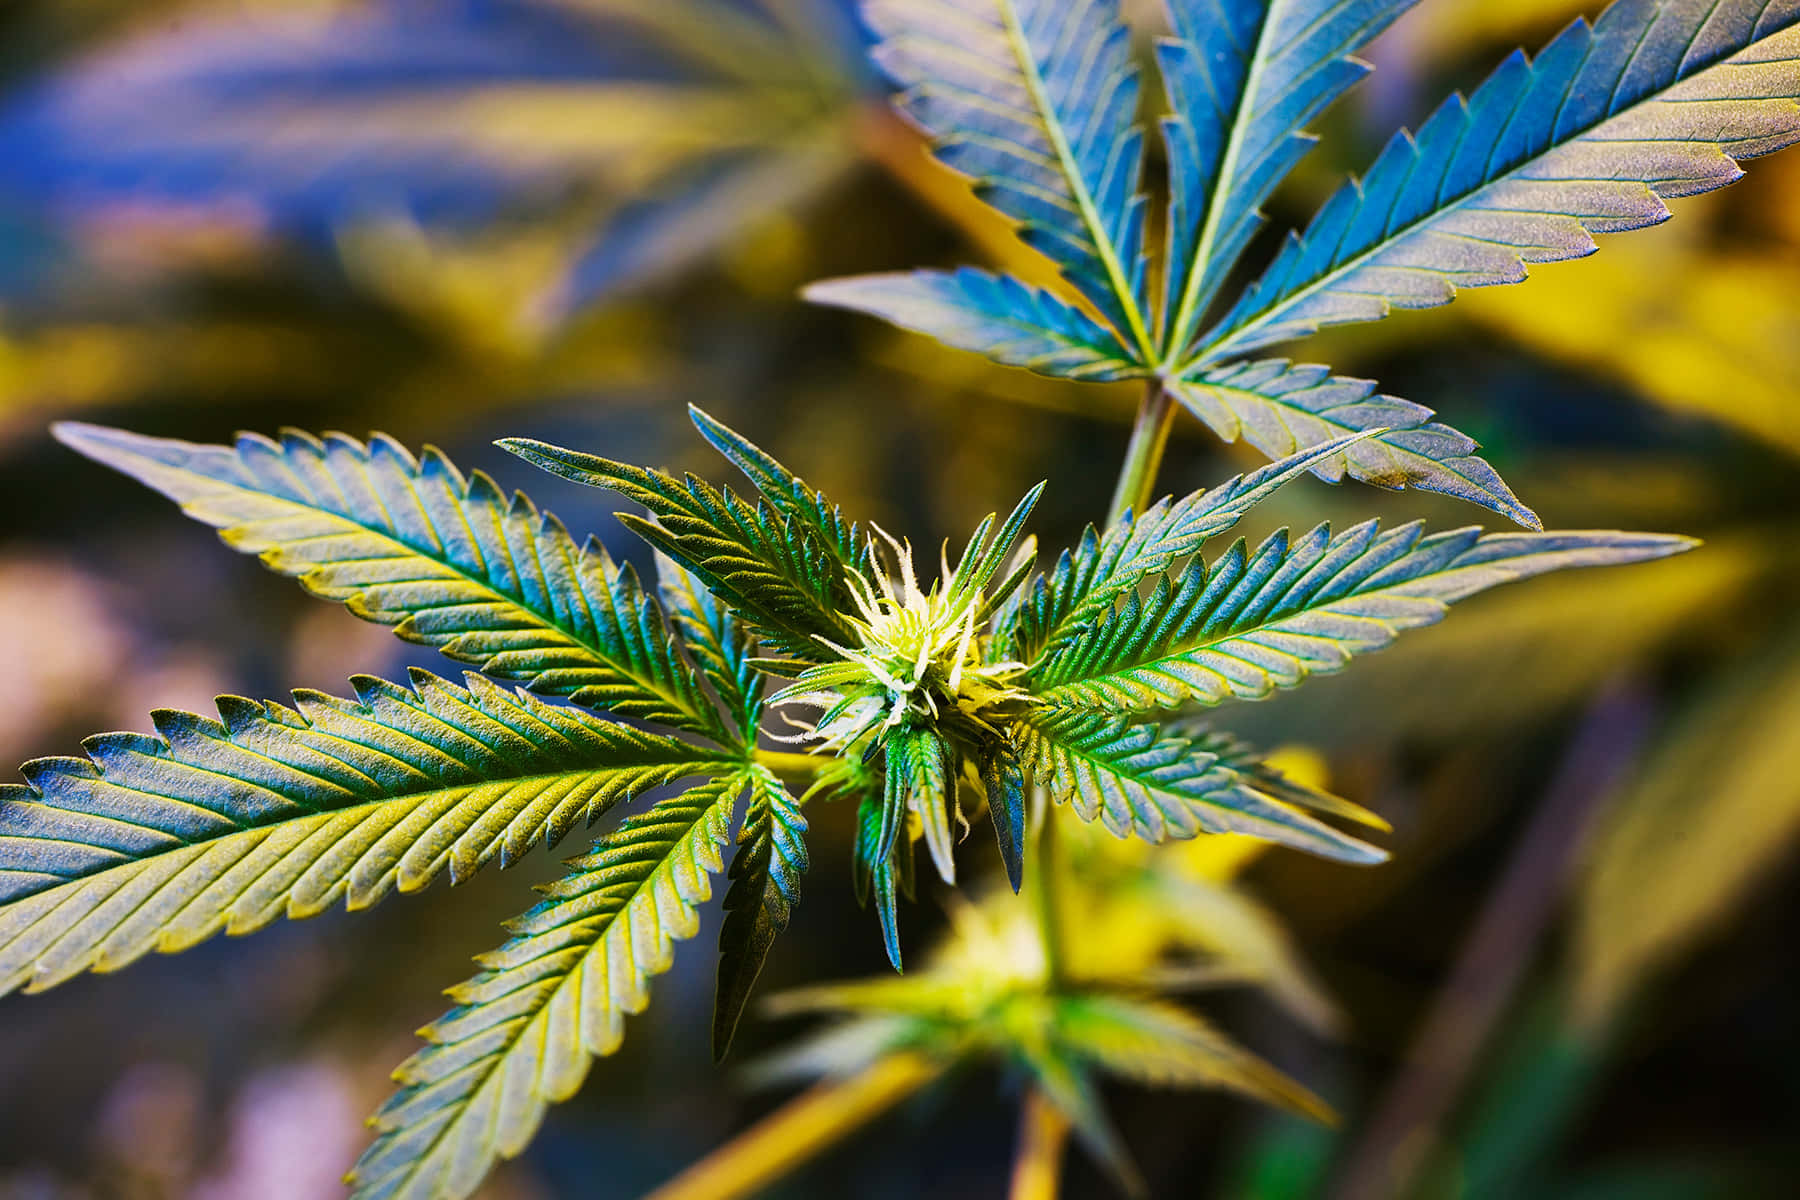 Close-up view of vibrant green marijuana buds